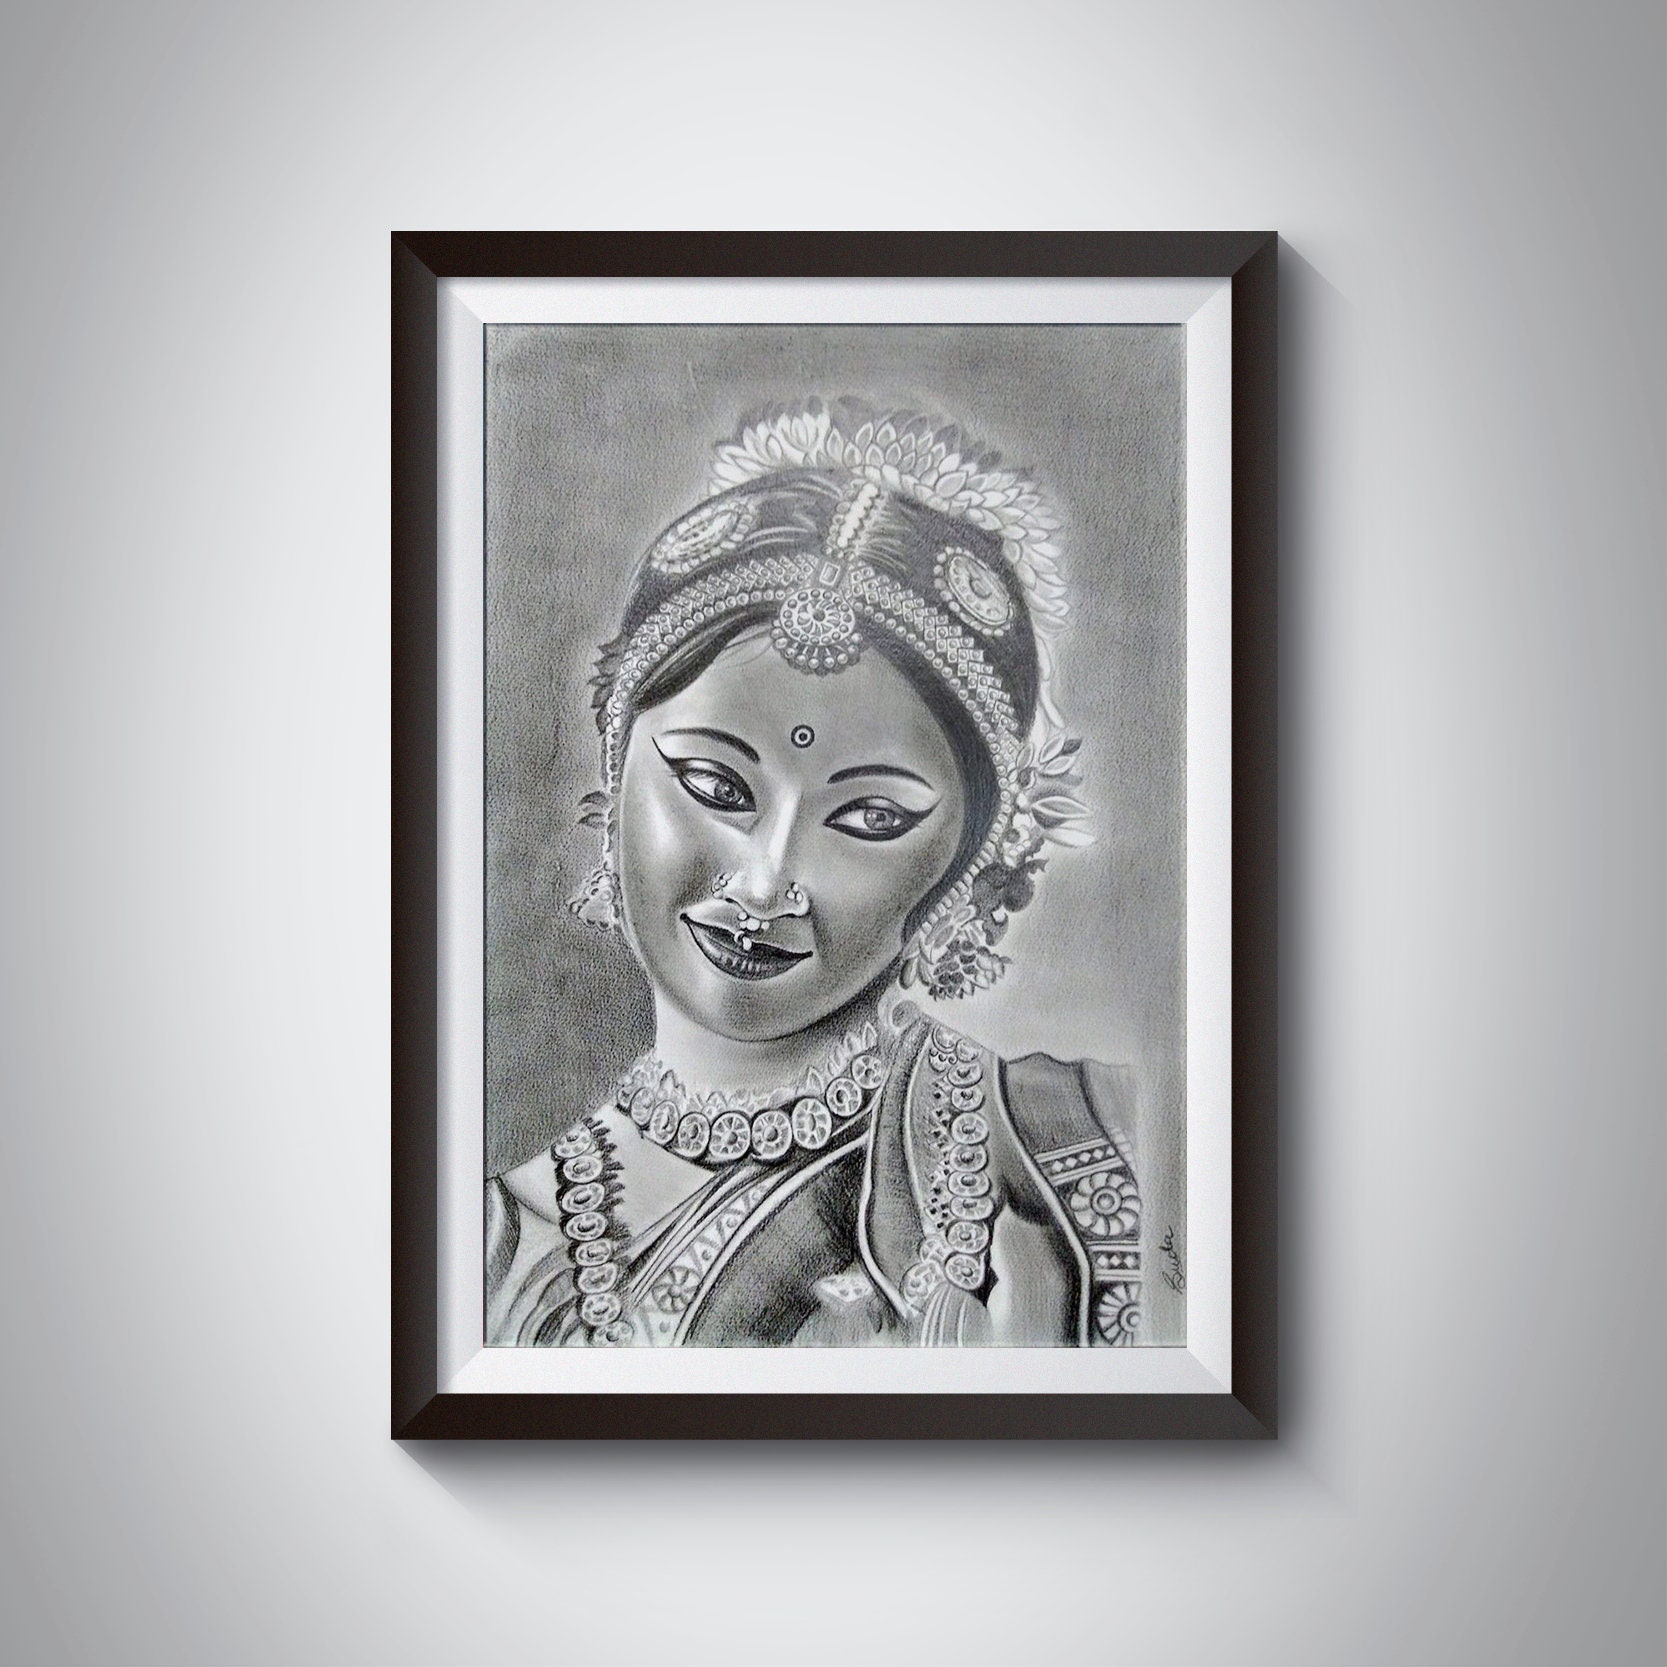 Drawn a Bharatanatyam dance pose using charcoal pencil - The Art Club -  Quora